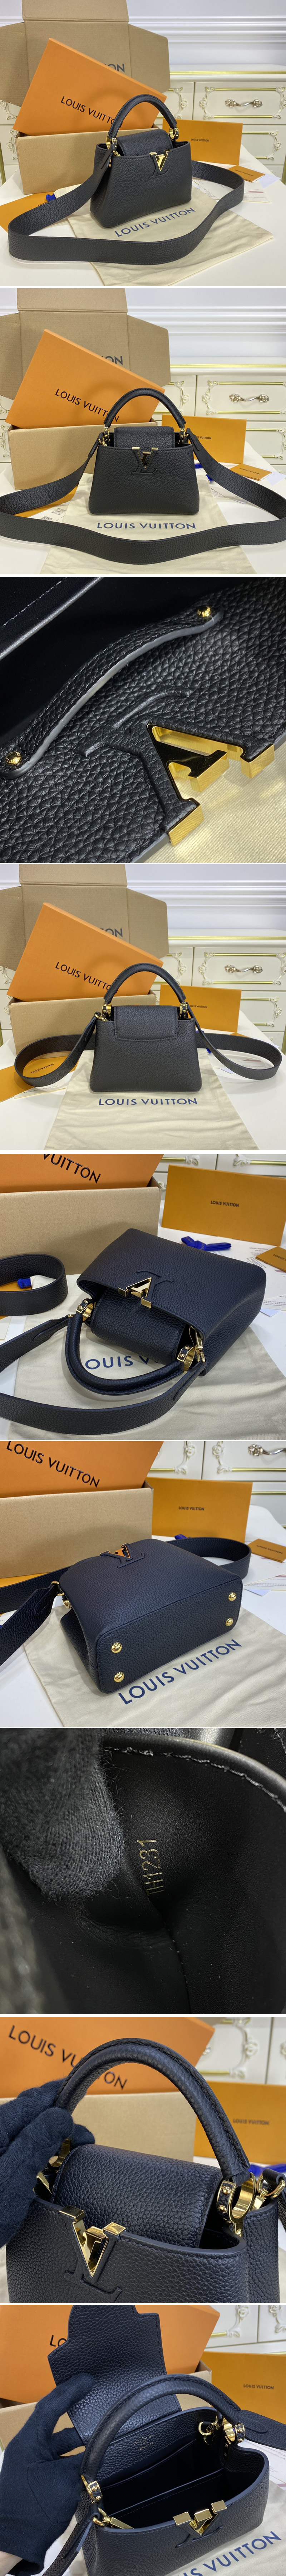 Louis Vuitton M80463 LV Pocket Organizer wallet in Ink Watercolor Replica  sale online ,buy fake bag